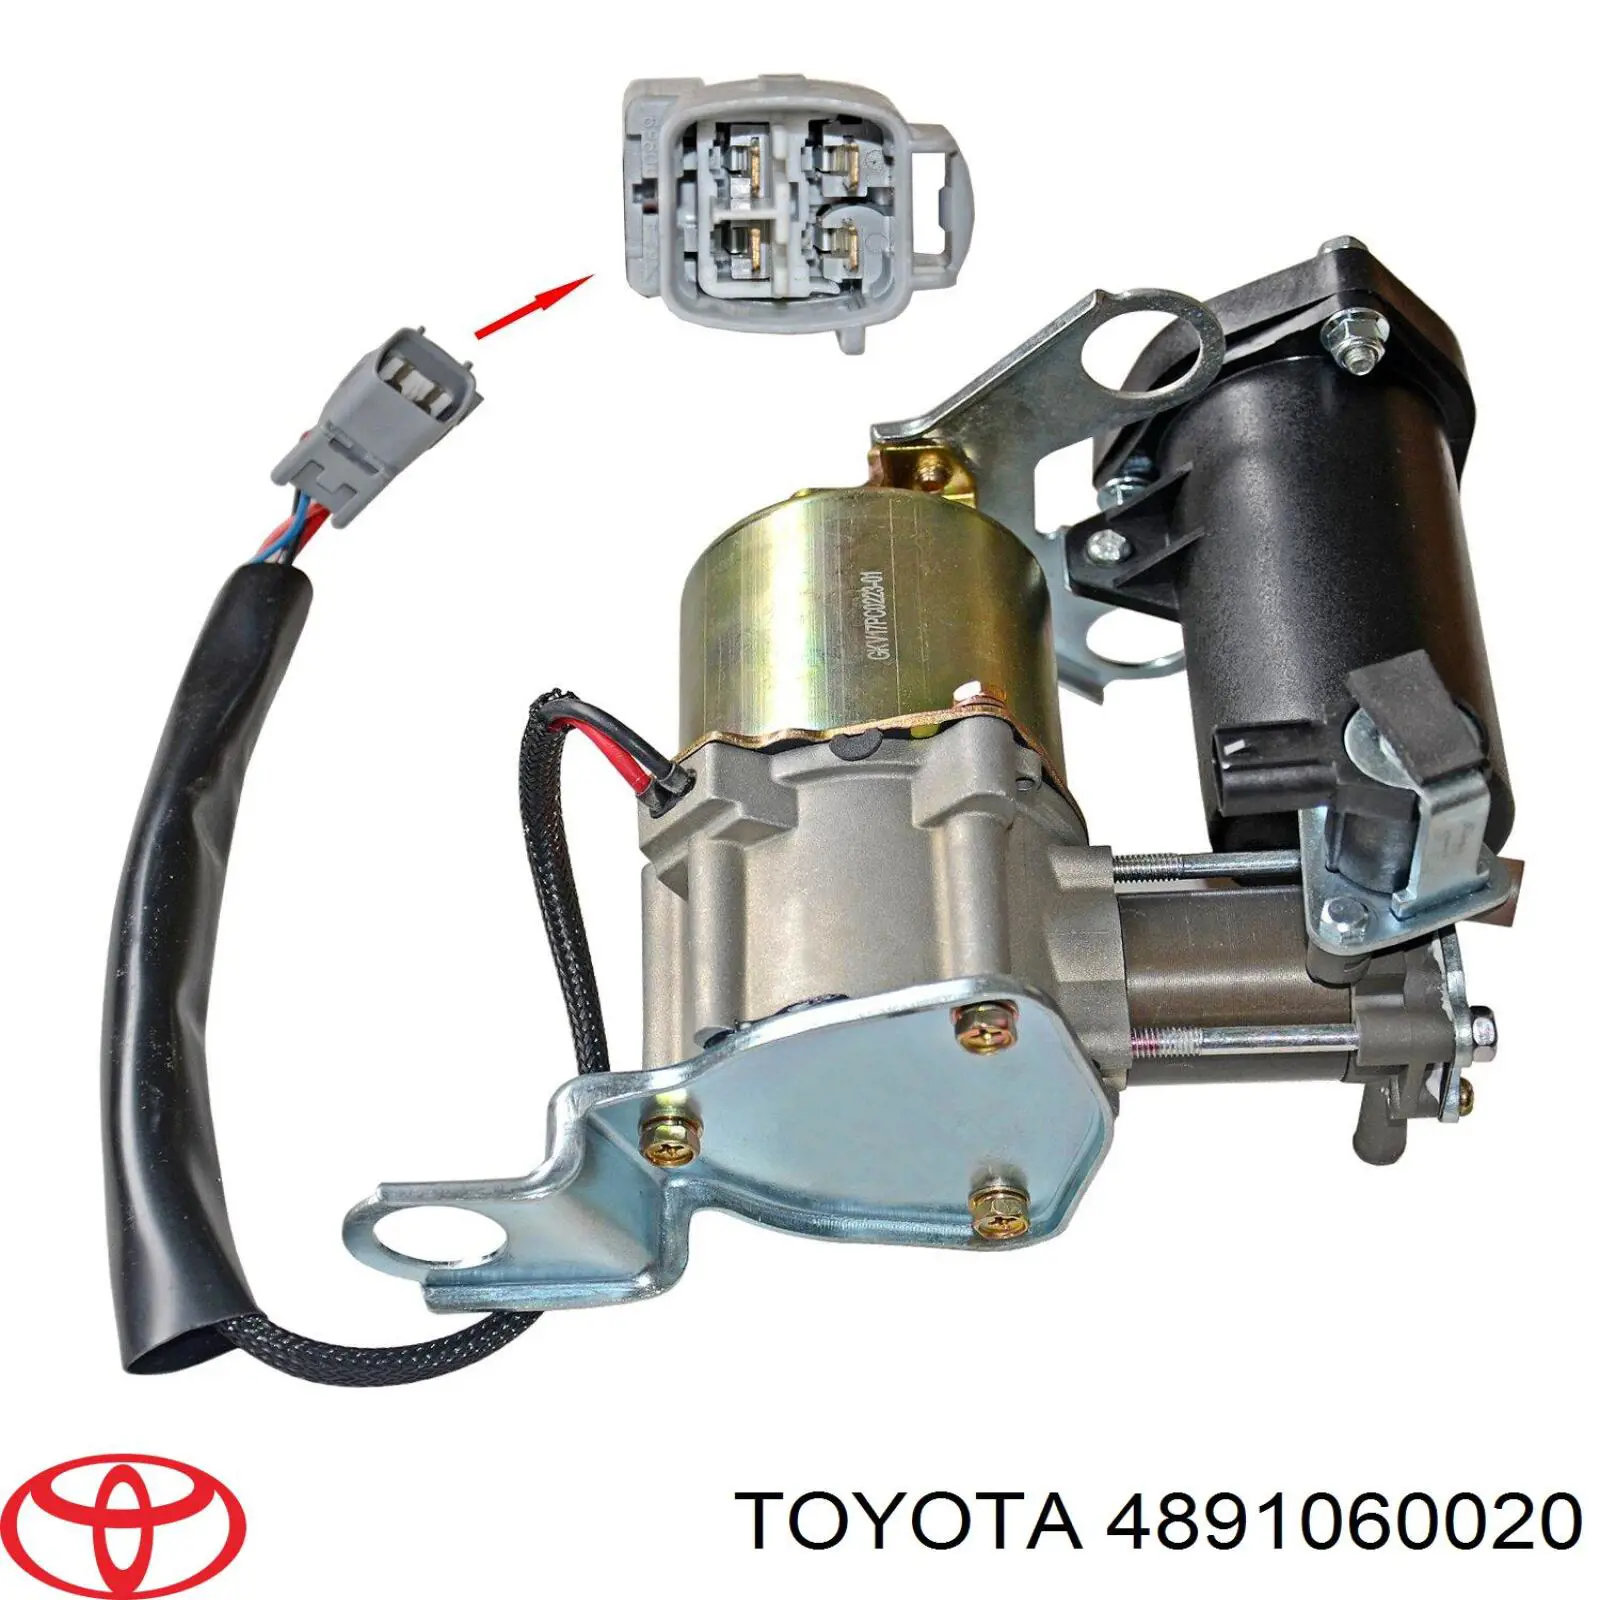 4891060020 Toyota bomba de compresor de suspensión neumática